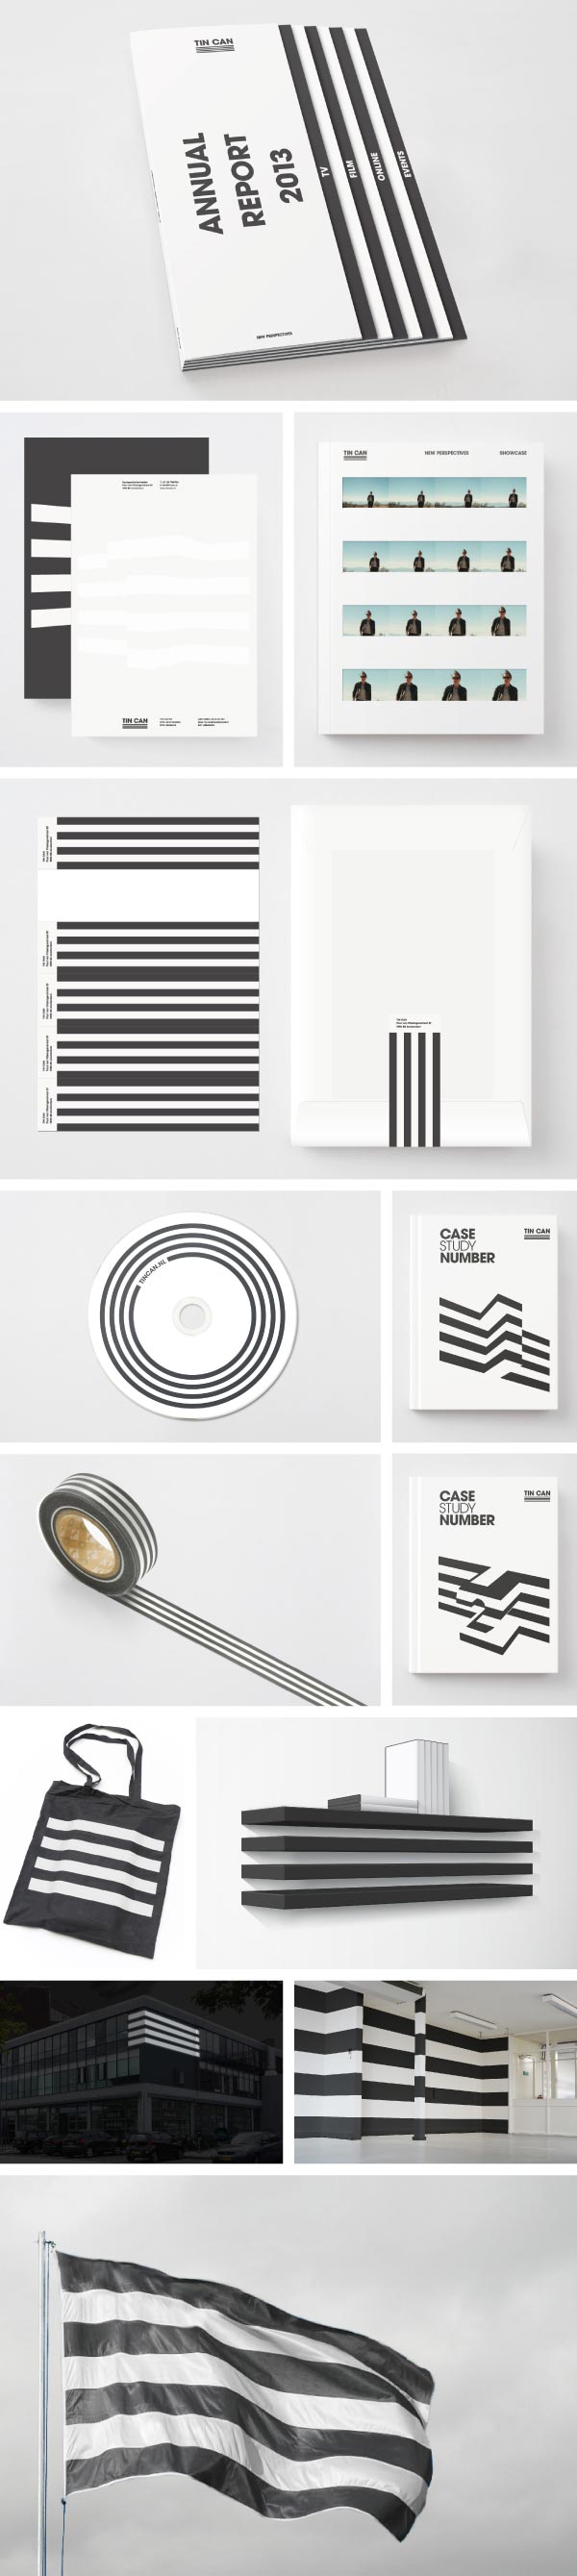 TIN CAN Identity - graphic design by Leon Dijkstra